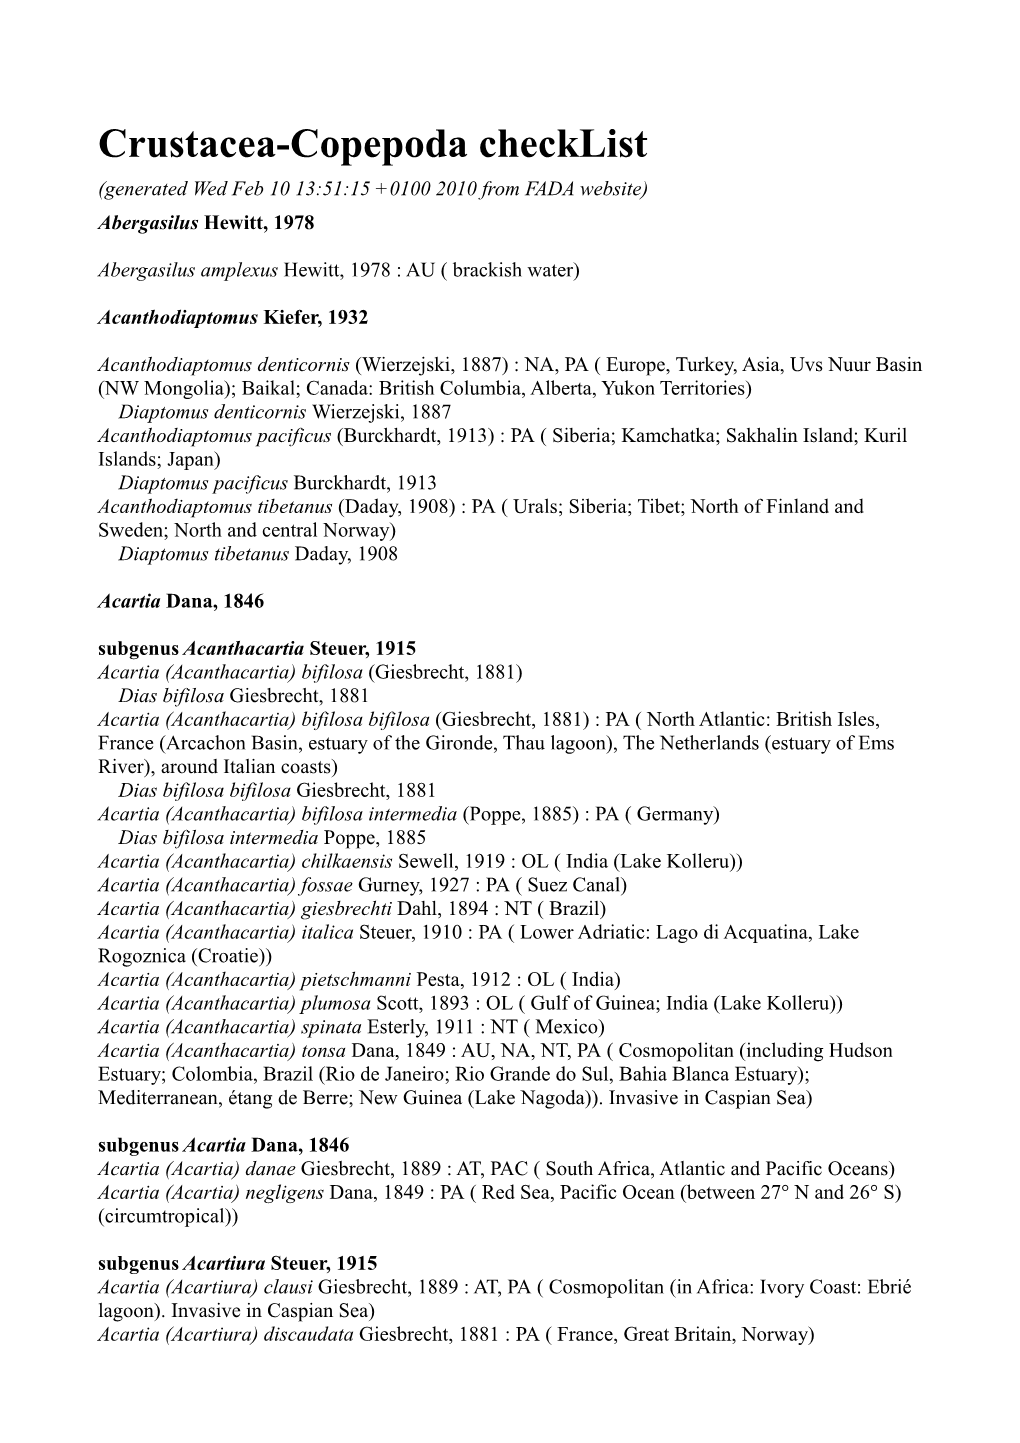 Crustacea-Copepoda Checklist (Generated Wed Feb 10 13:51:15 +0100 2010 from FADA Website) Abergasilus Hewitt, 1978